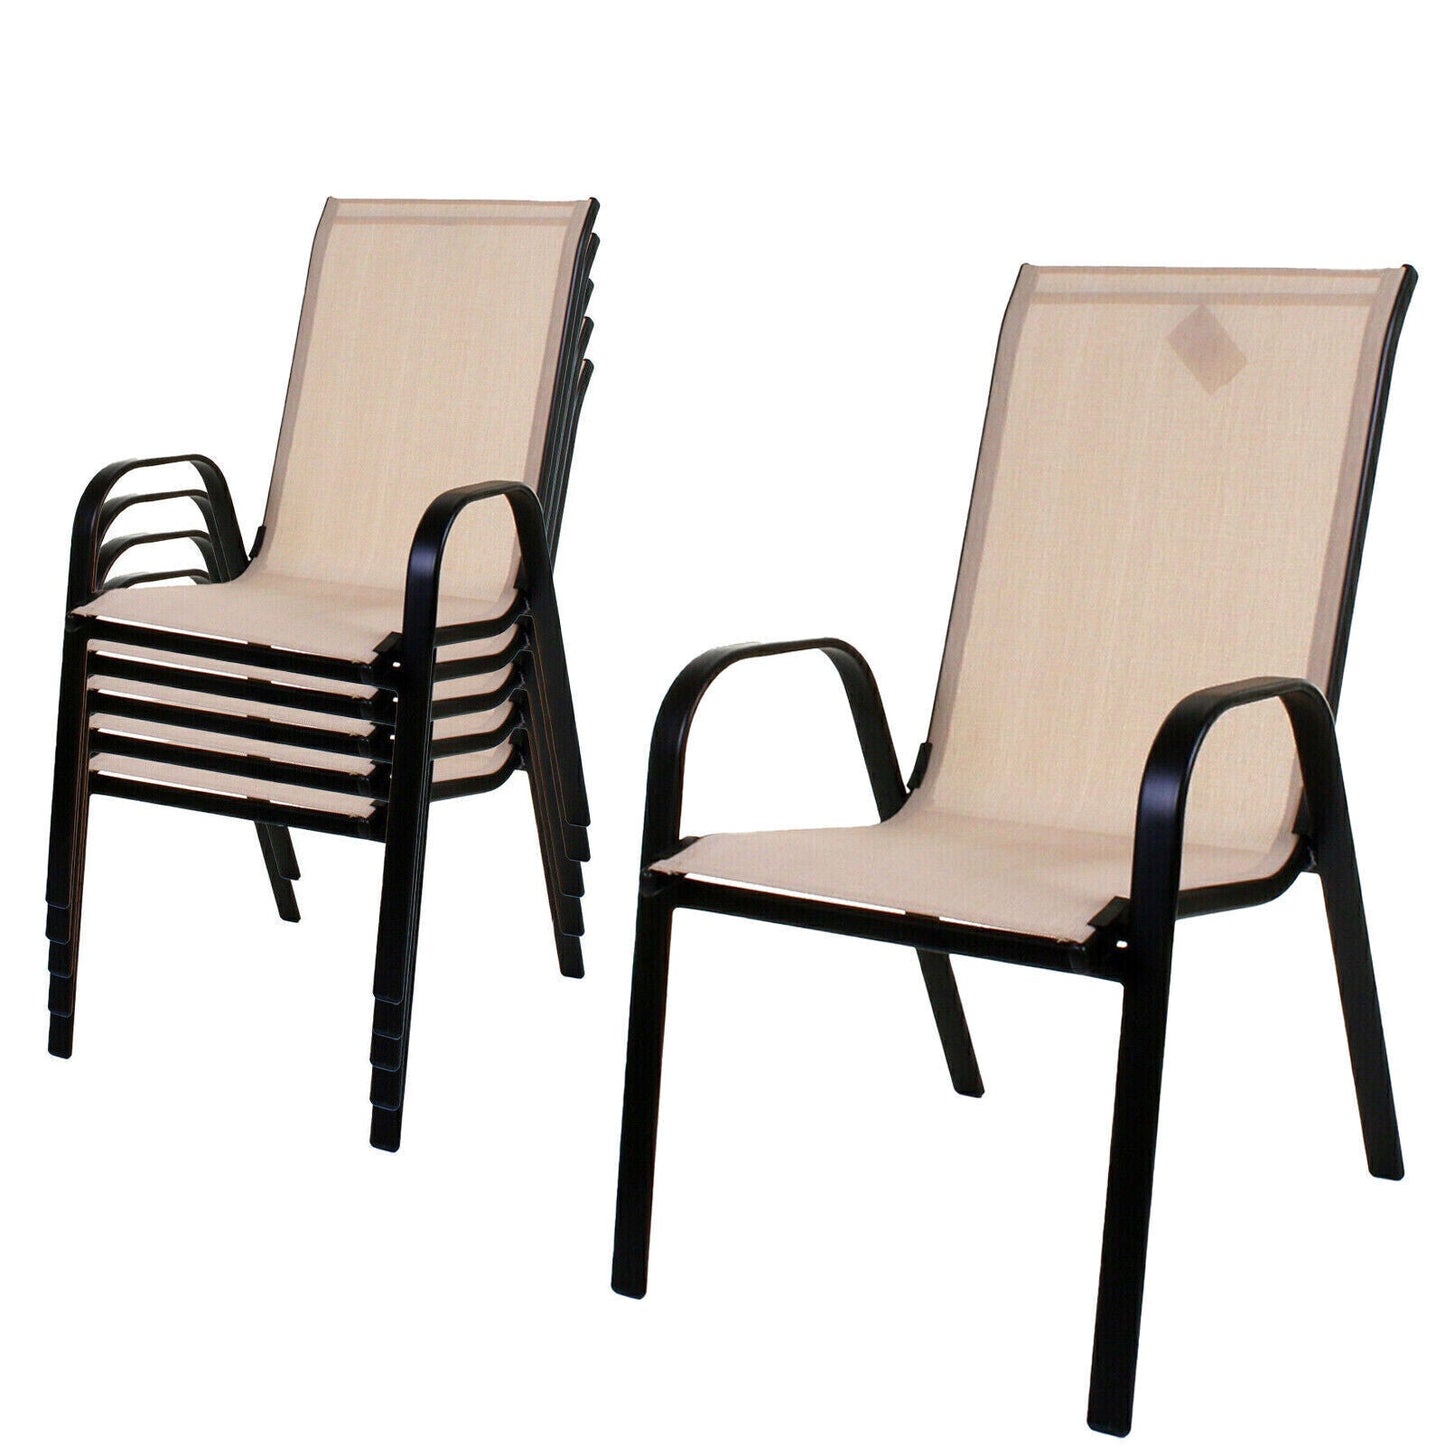 Copy of 9PC Rectangular White Frame Black Glass Table, Cream Chair & Parasol Furniture Set